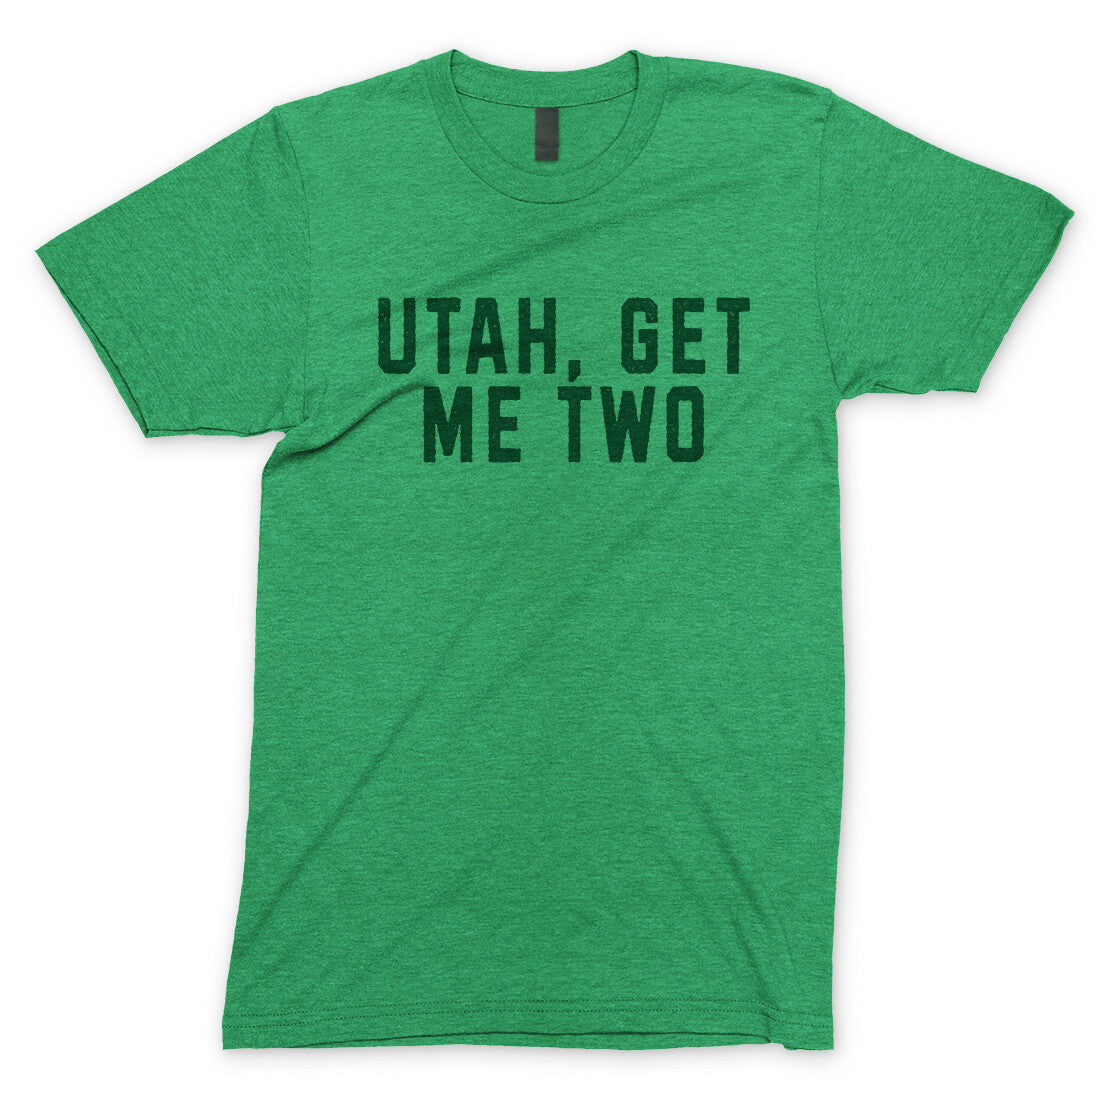 Utah Get me Two in Heather Irish Green Color